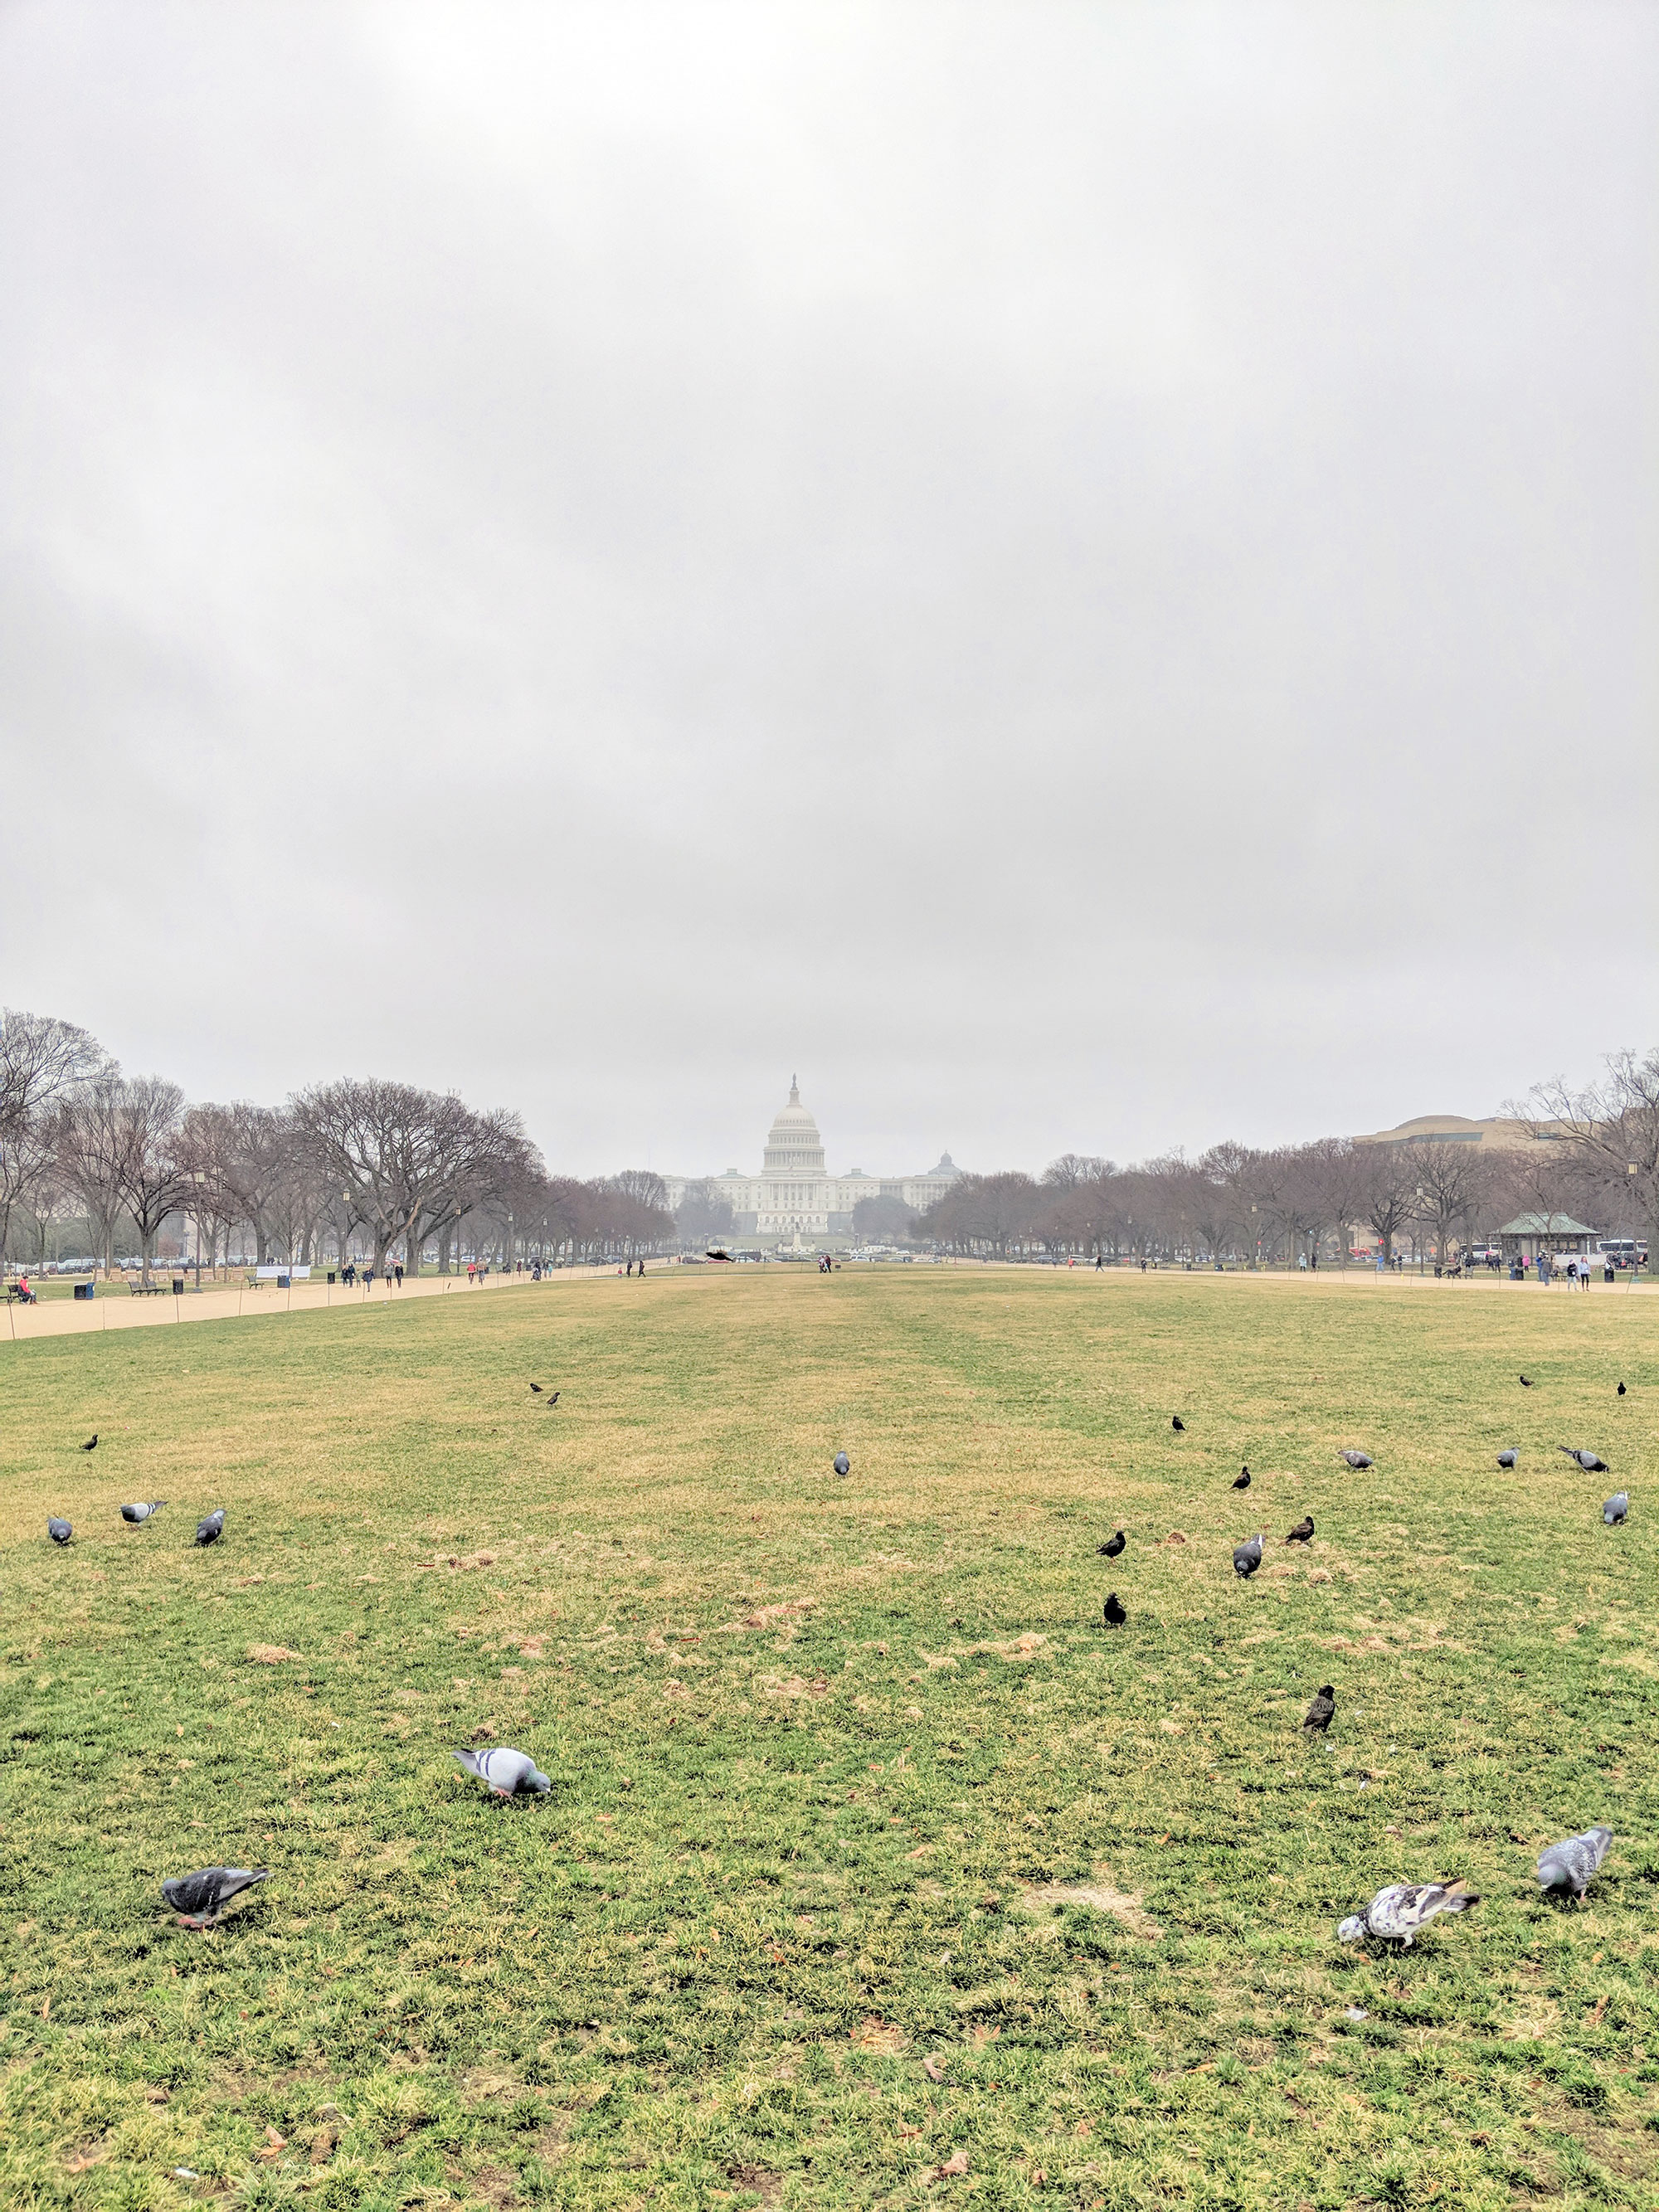 Pigeons swarming the National Mall at Washington D.C.